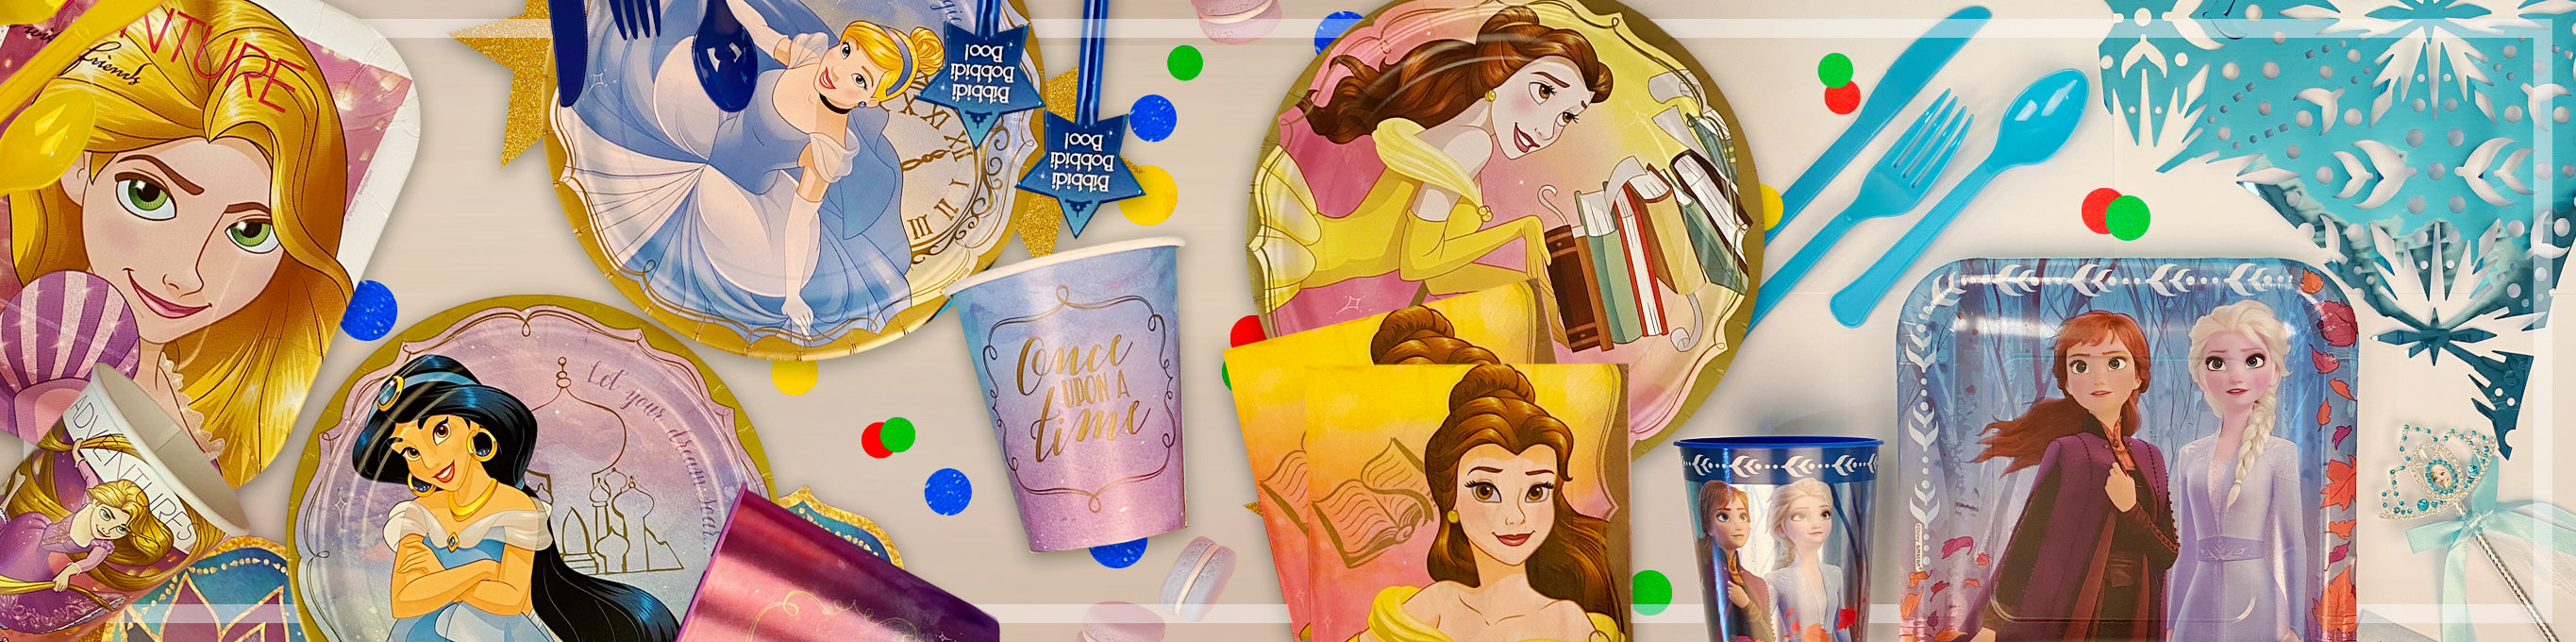 Disney Theme Party Ideas for Girls